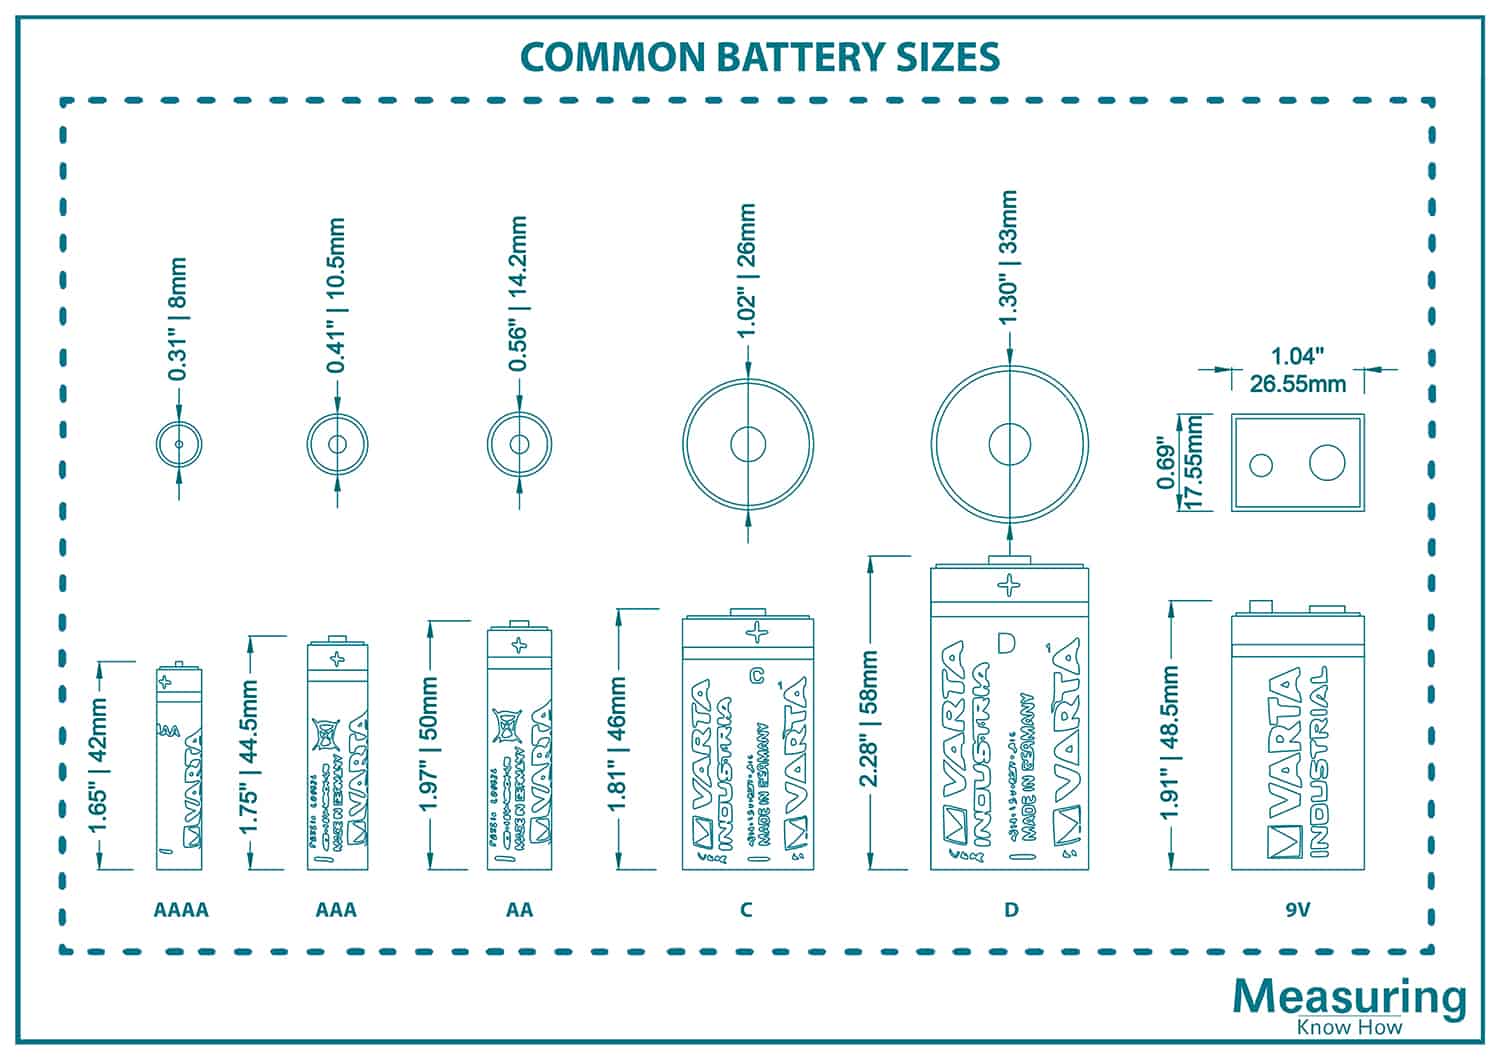 Common battery sizes